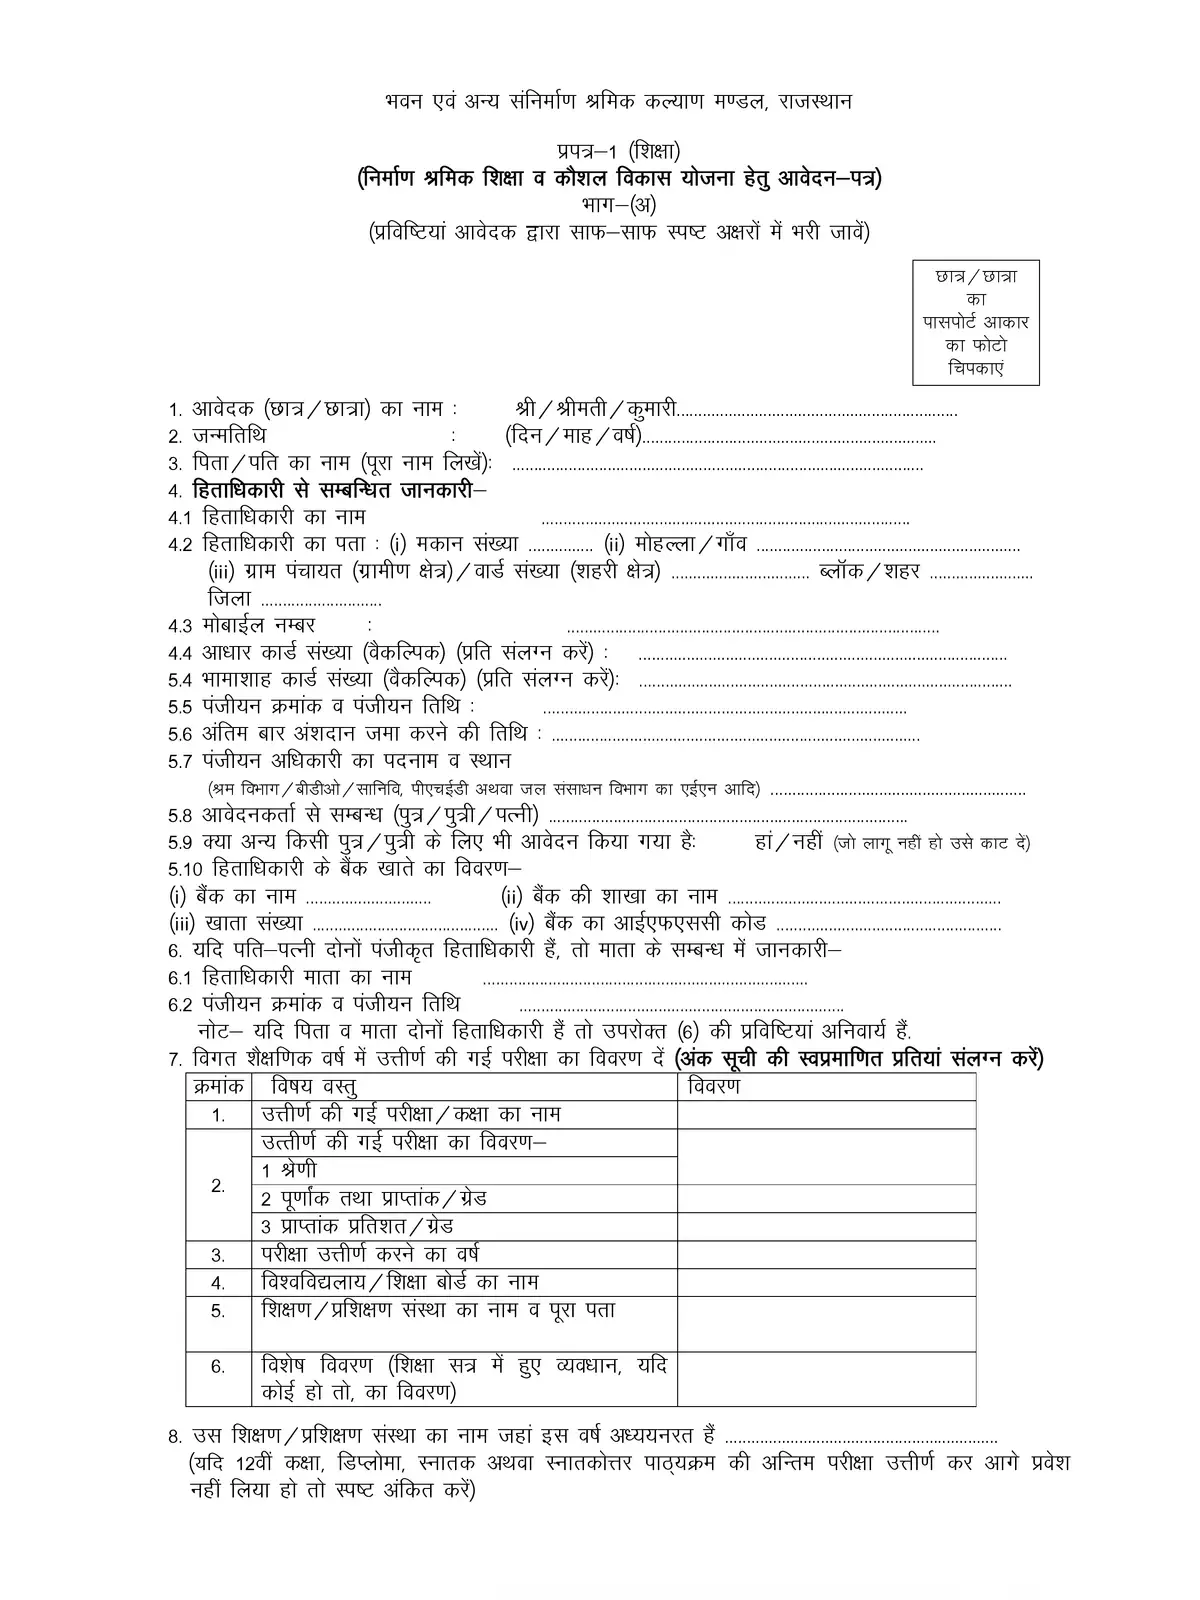 Rajasthan BOCW Children Education Scholarship Scheme Form